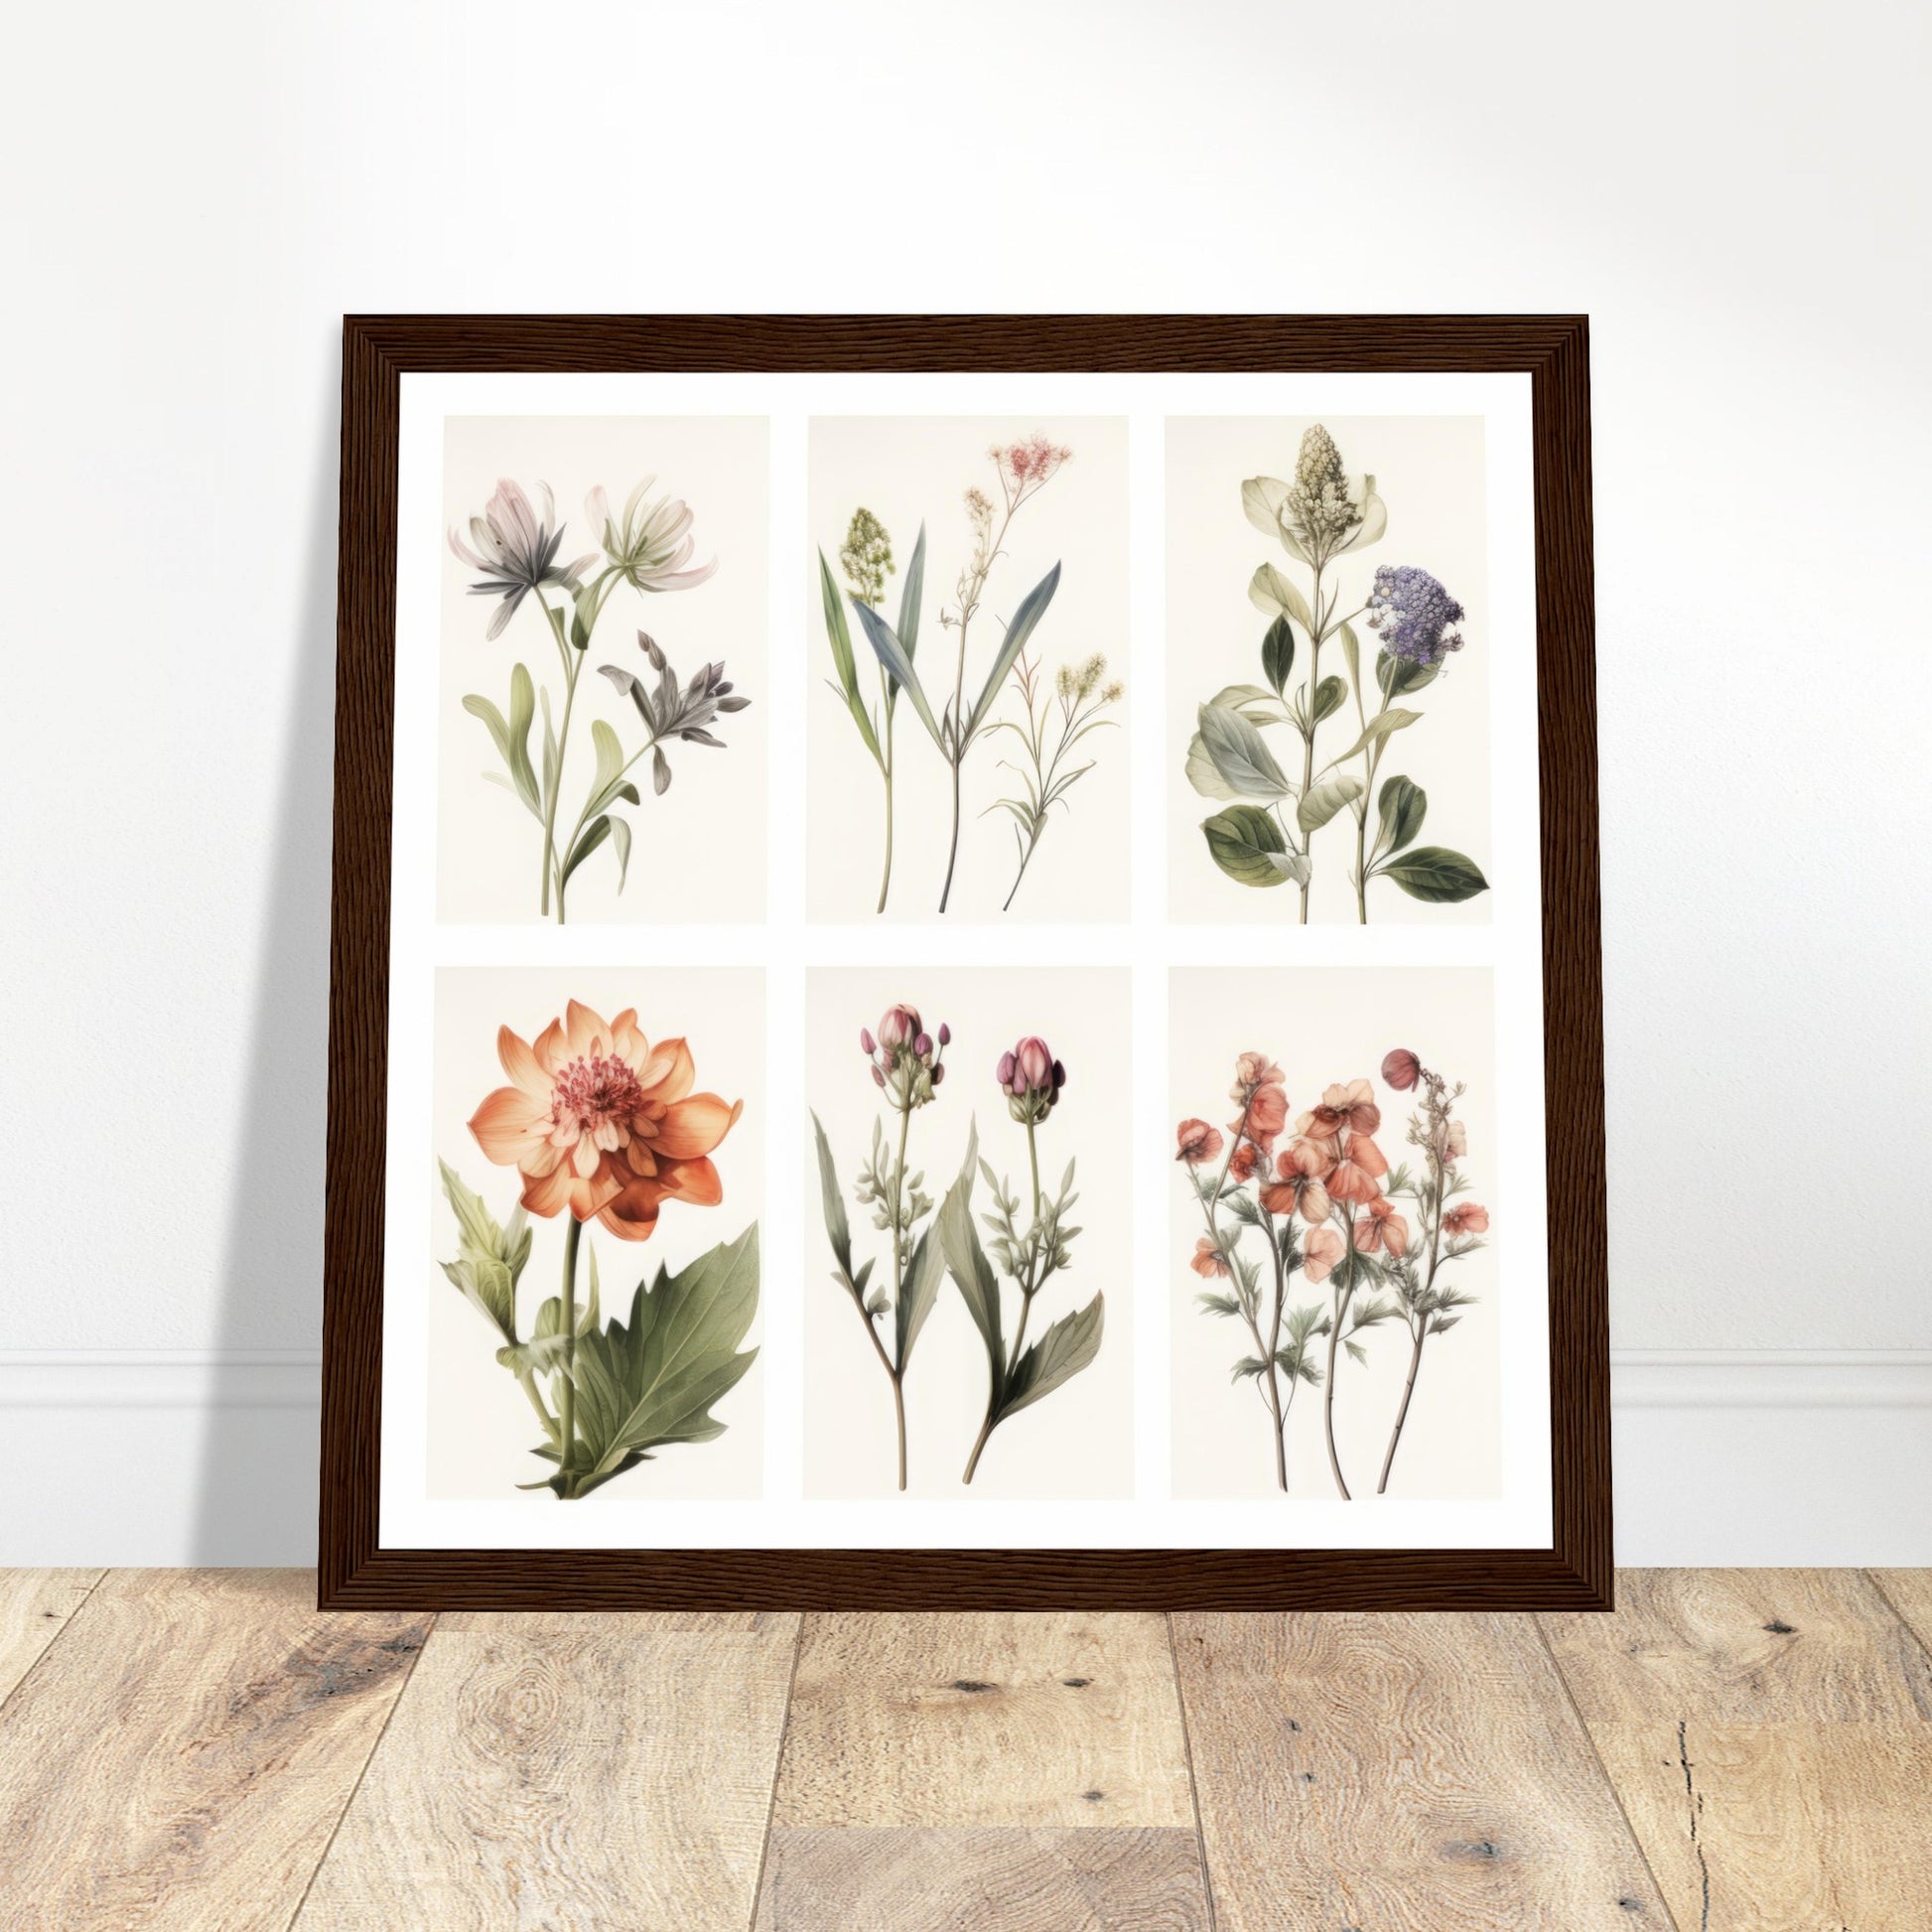 Elegance - Botanical Artwork #3- Print Room Ltd Black frame 50x50 cm / 20x20"